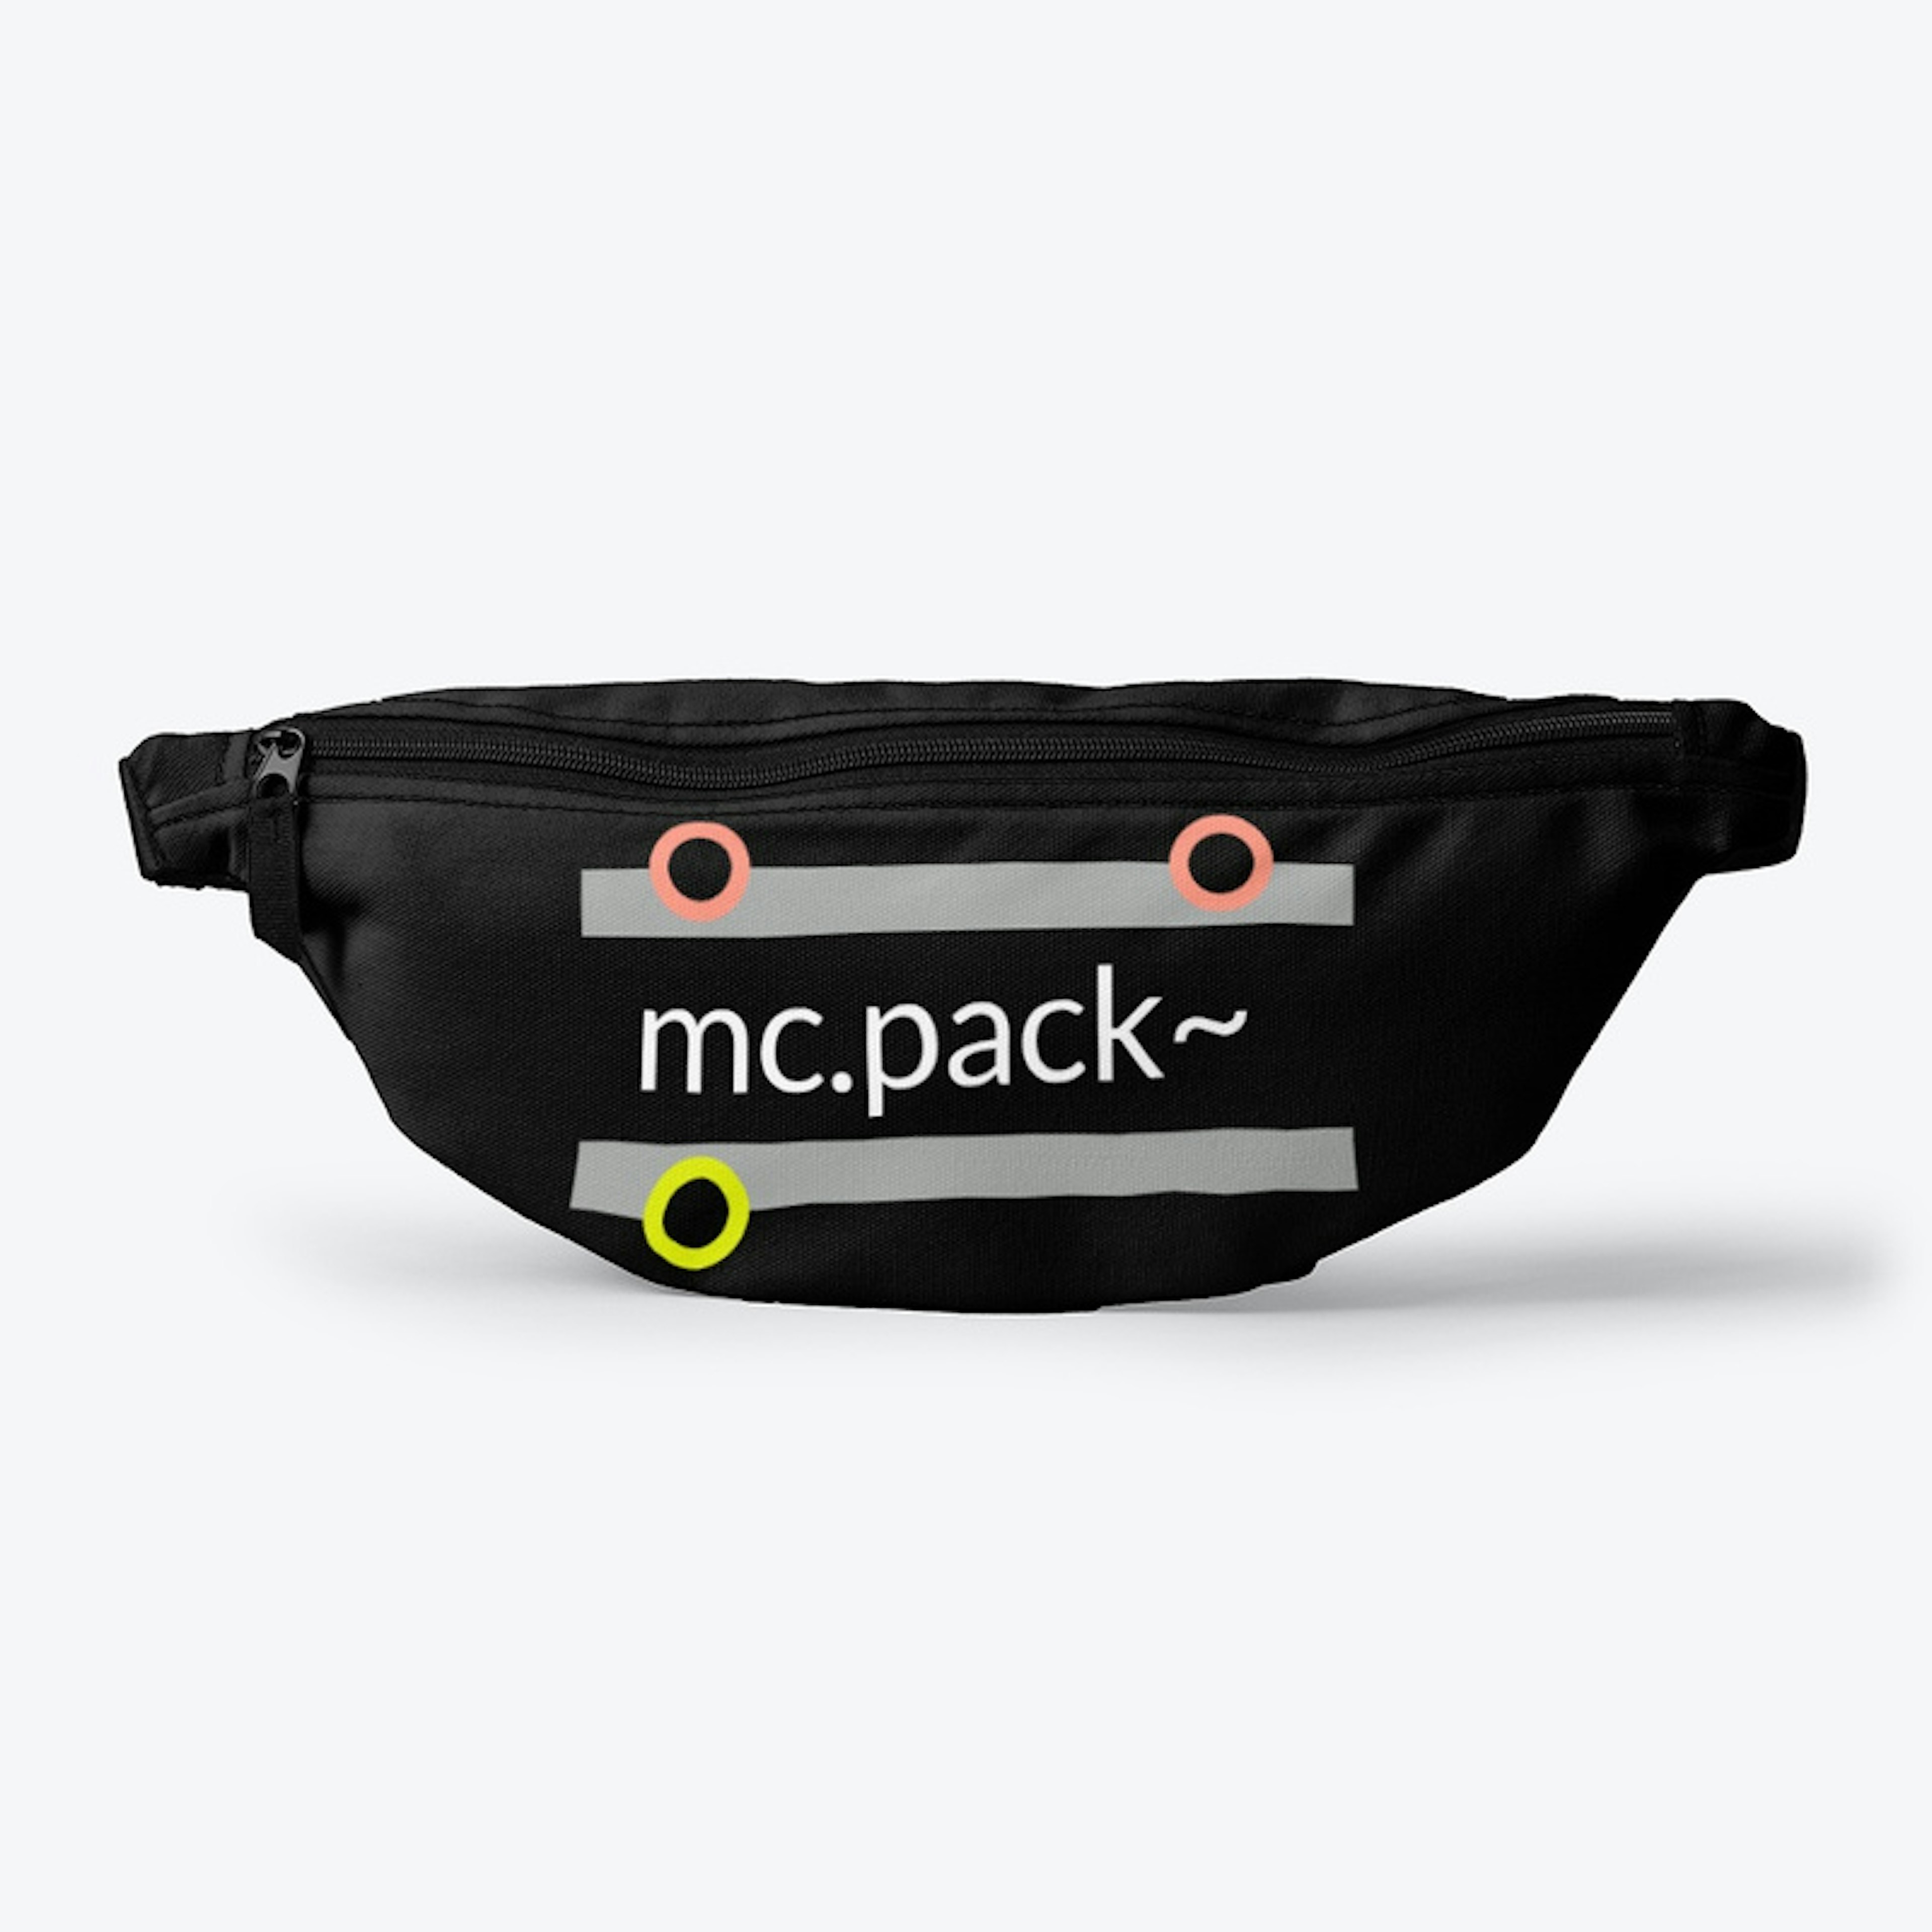 Max object "mc.pack~"